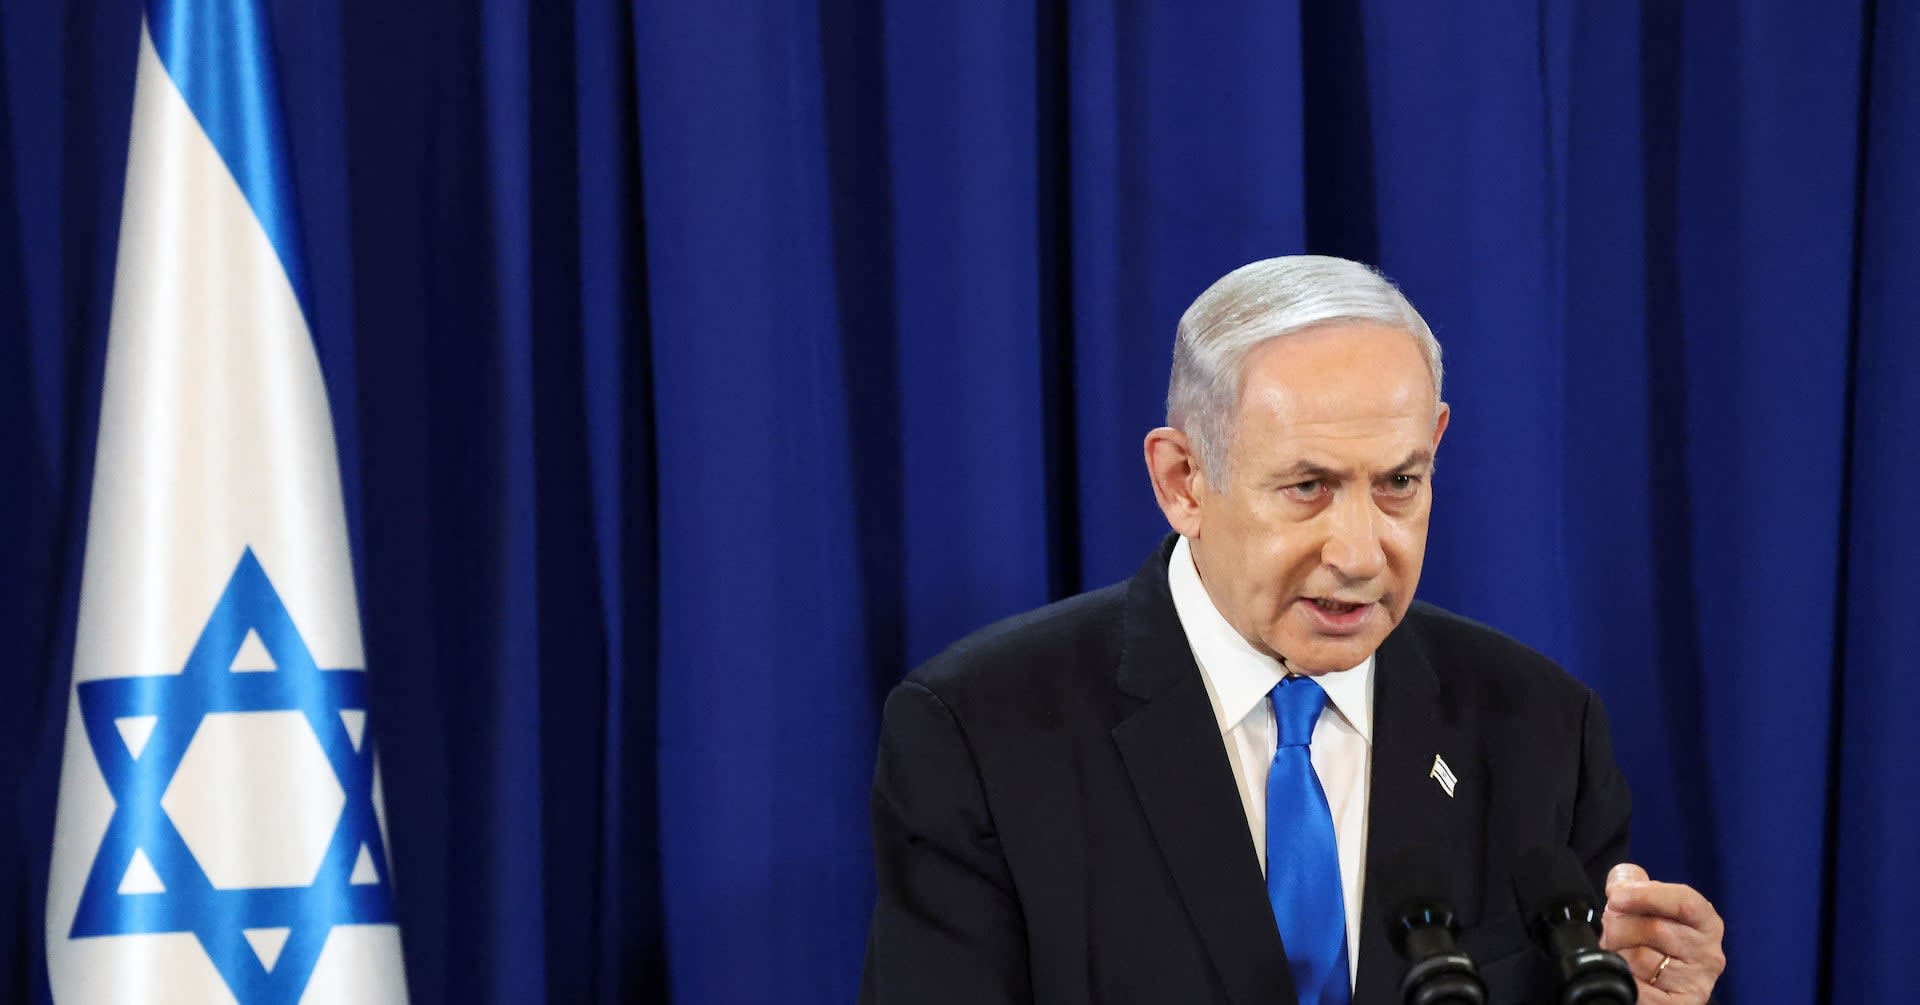 Netanyahu says not certain that Hamas leader killed in strike